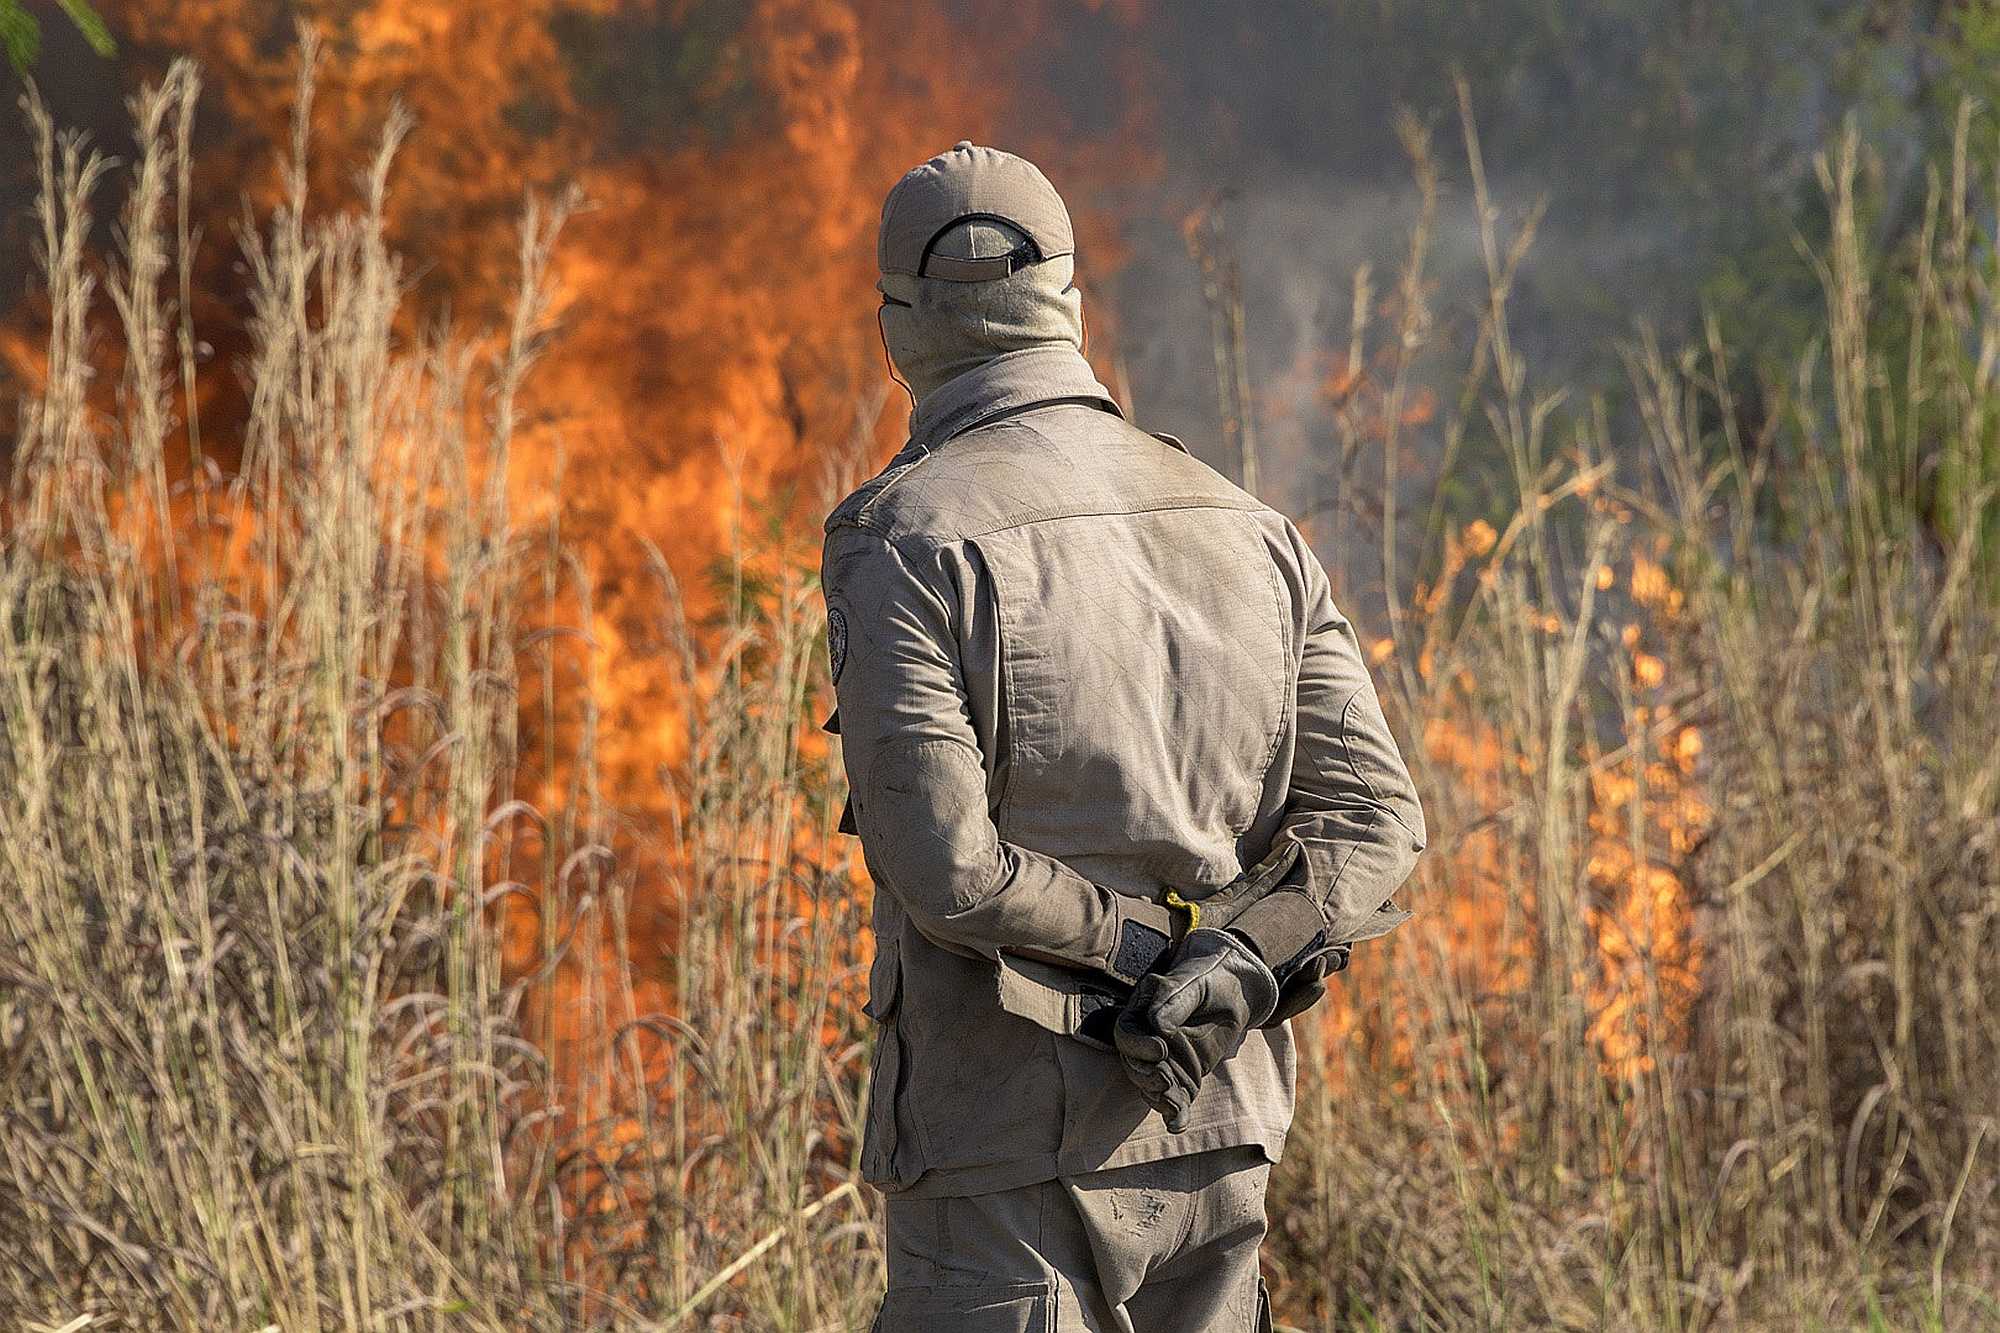 Burning the land in the Brazilian Amazon is way too common. EPA-EFE/ROGERIO FLORENTINO